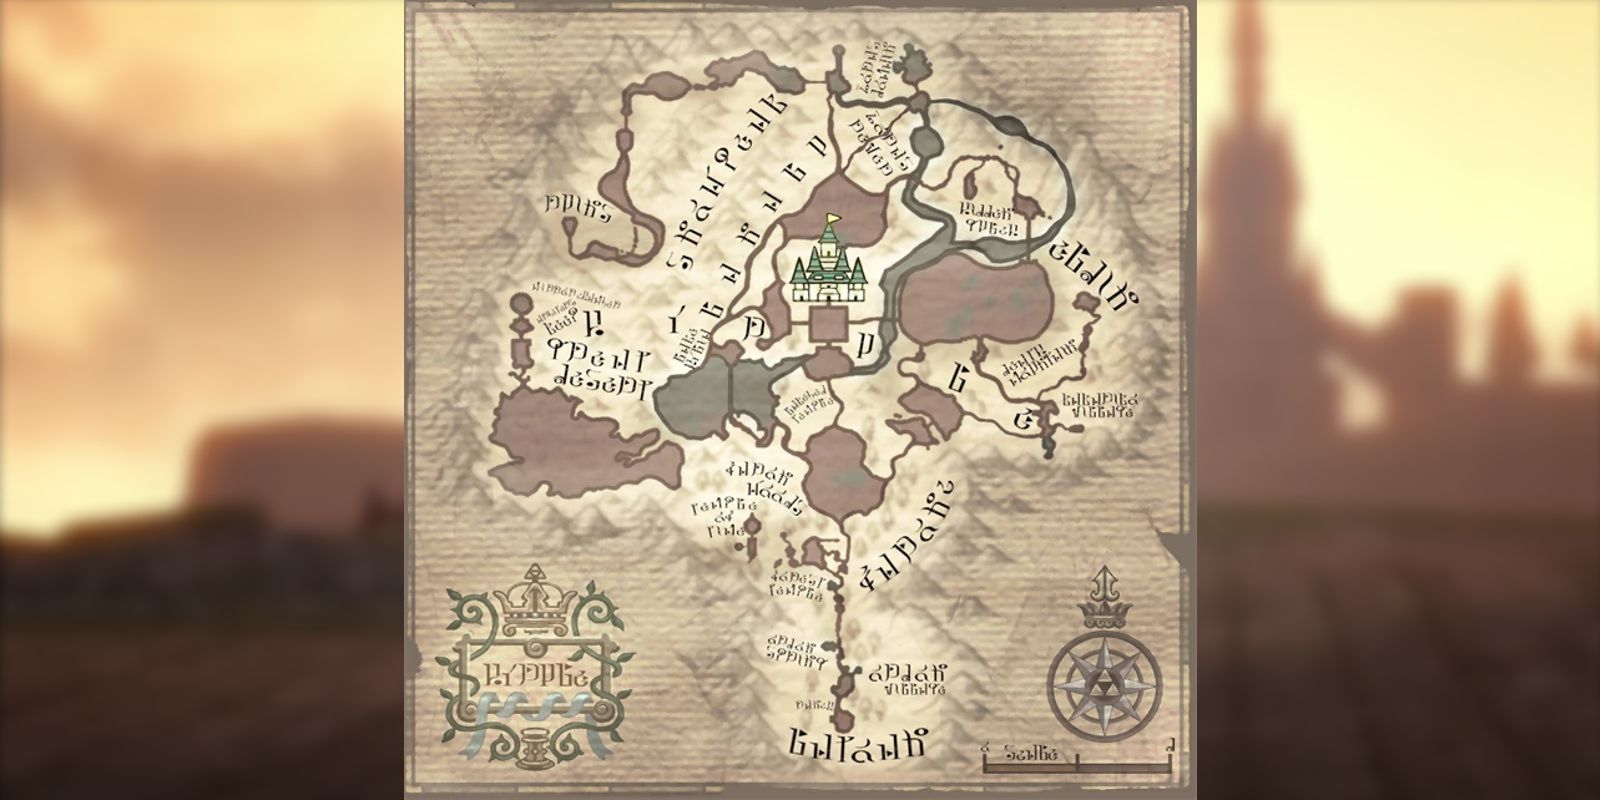 A map of Twilight Princess' Hyrule.